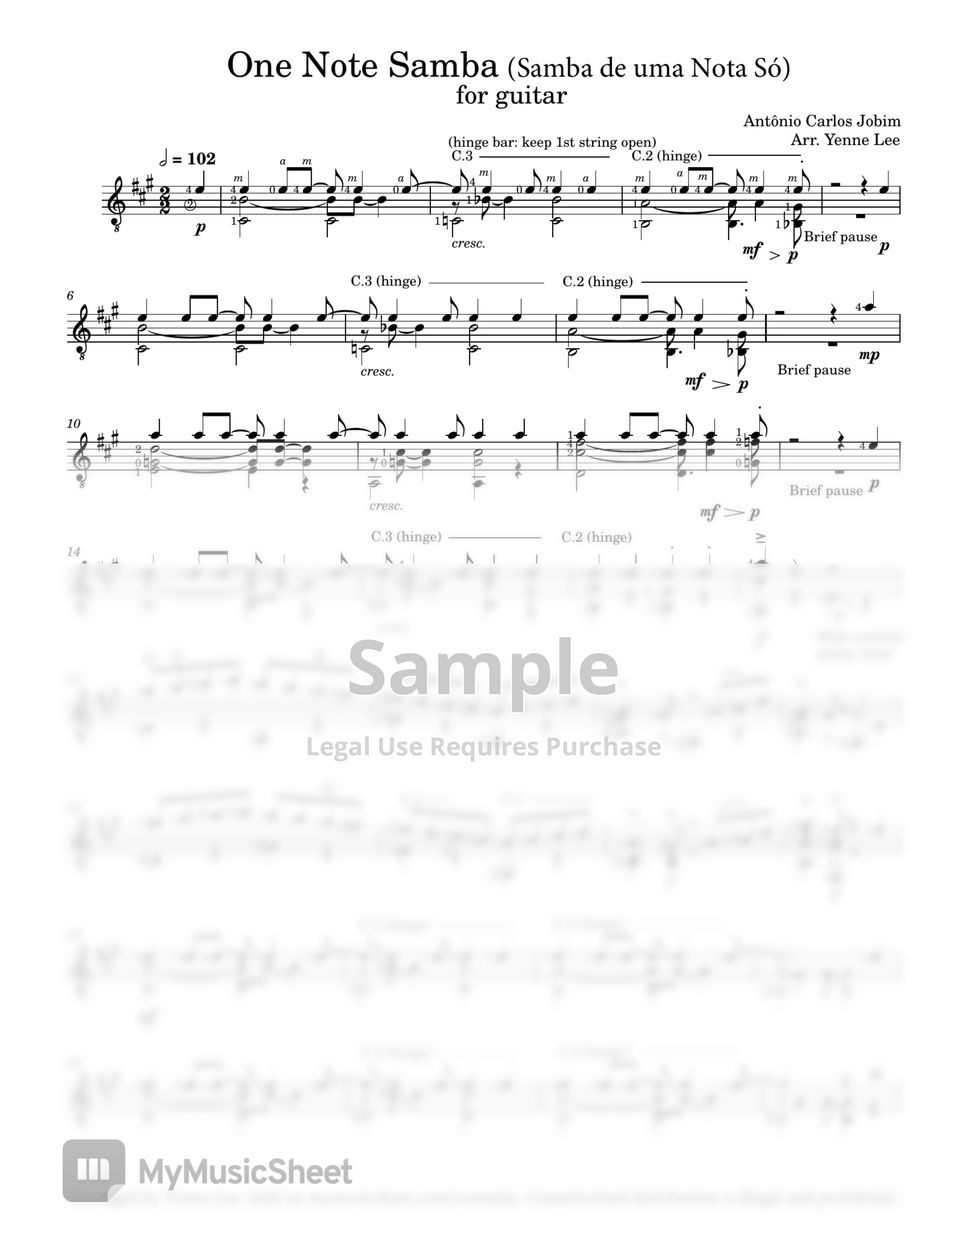 Antonio Carlos Jobim - One Note Samba (Staff only) by Yenne Lee